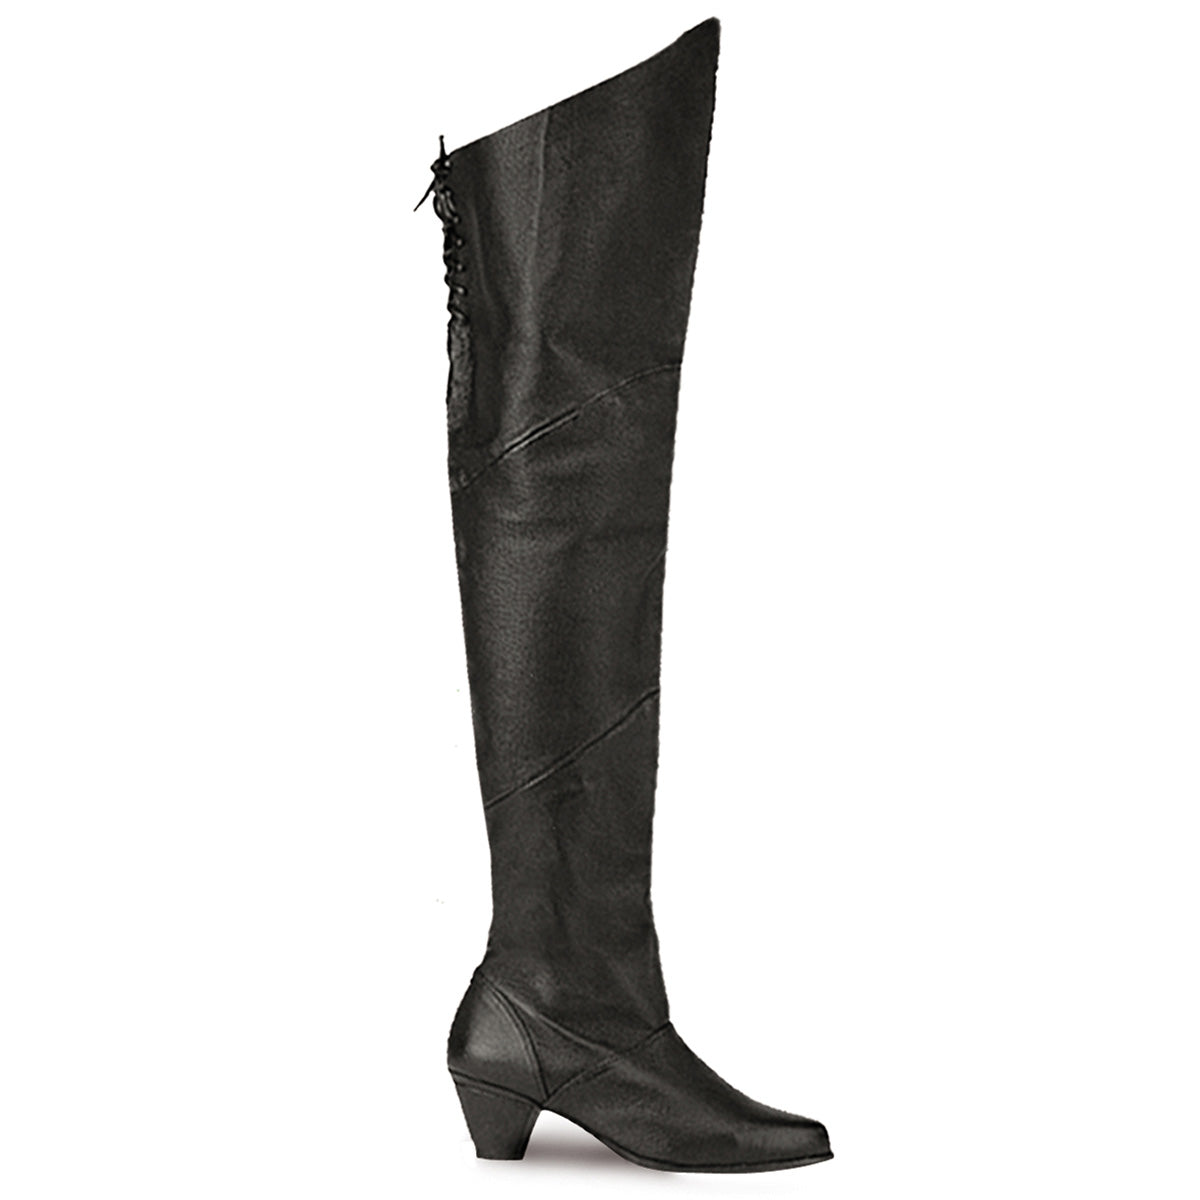 MAIDEN-8828 Pleasers Funtasma 2.5" Heel Black Leather Women's Boots